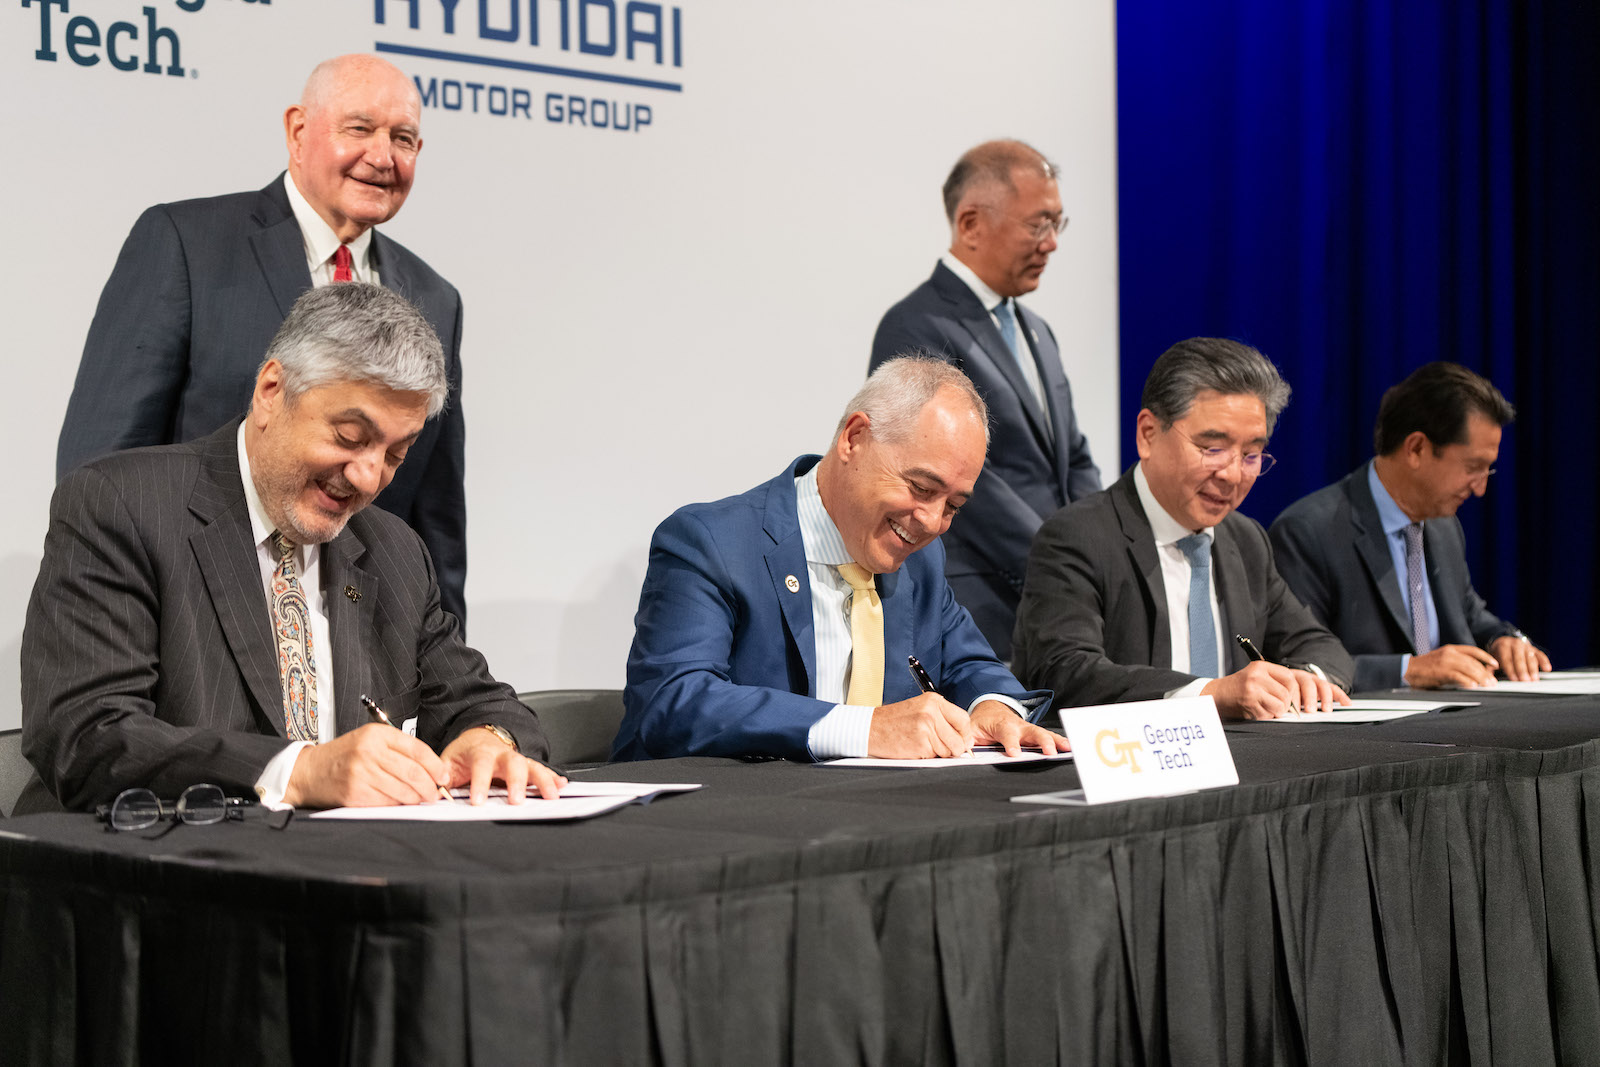 signing of Memorandum of Understanding with Hyundai Motor Group